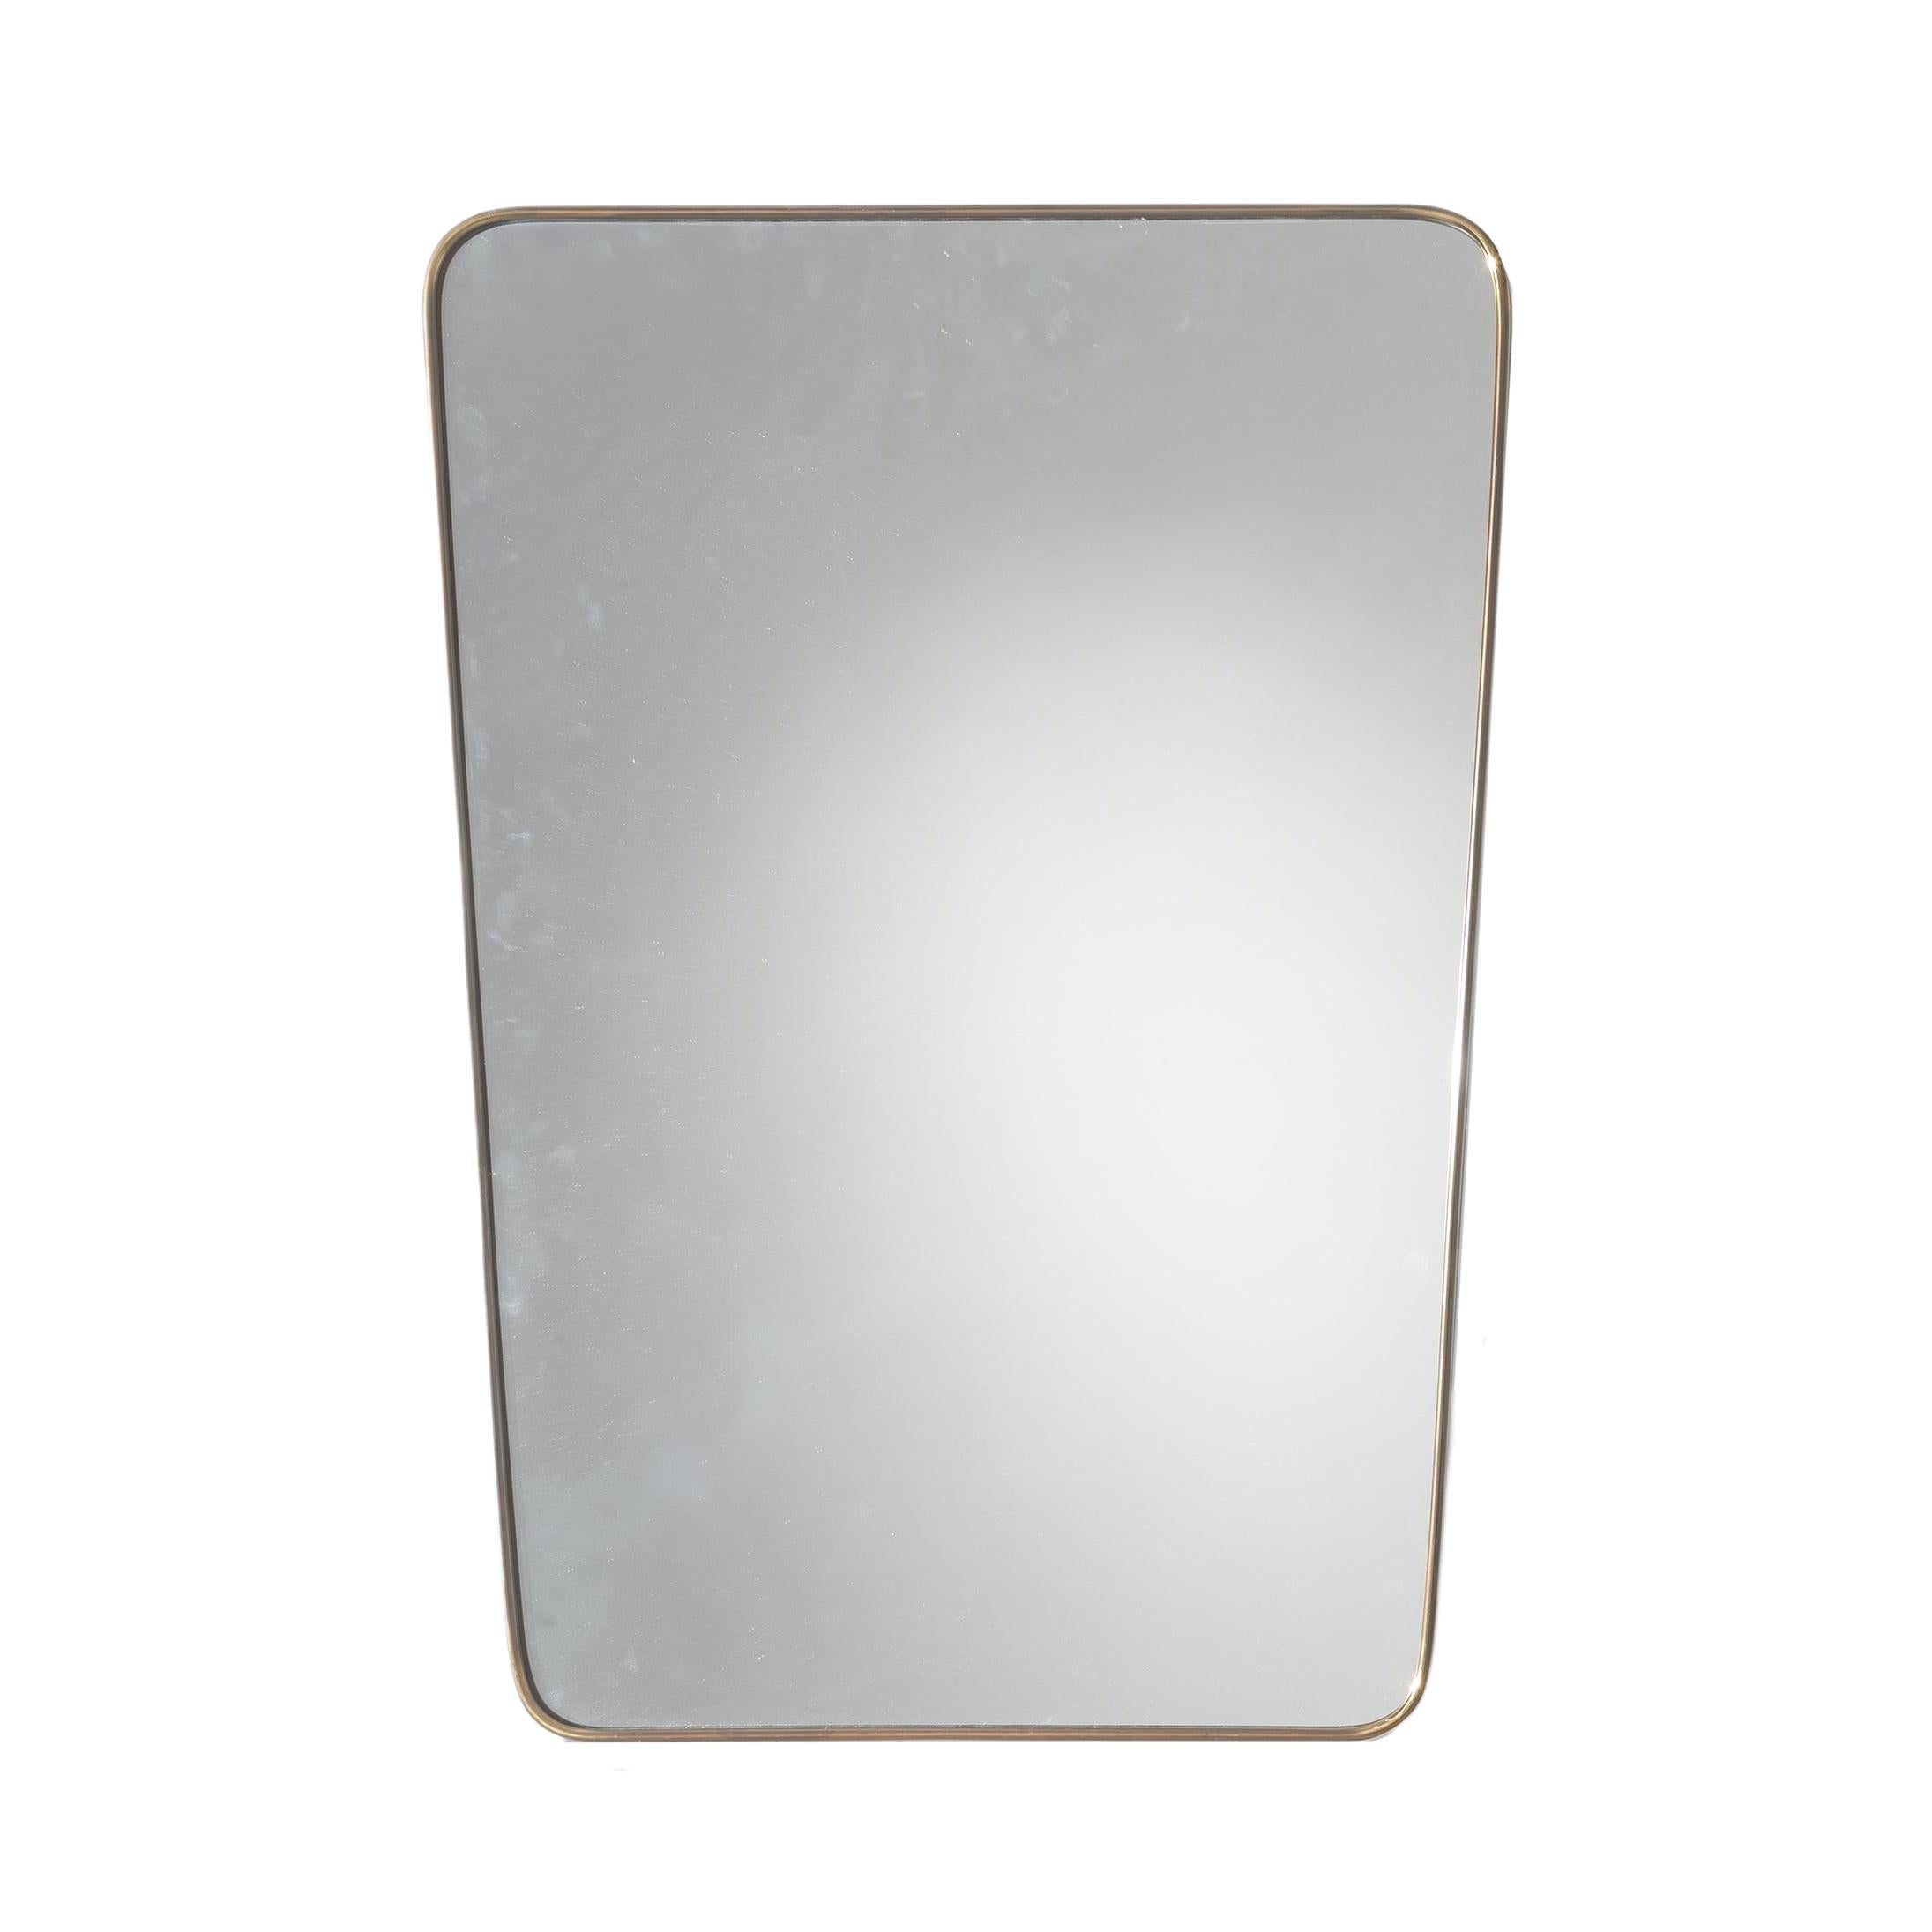 Italian Brass Framed Mirror, 1950s

An excellent quality 1950s Italian brass framed mirror in the style of Gio Ponti. In original condition.

Dimensions: H 68.5cm x W 48cm